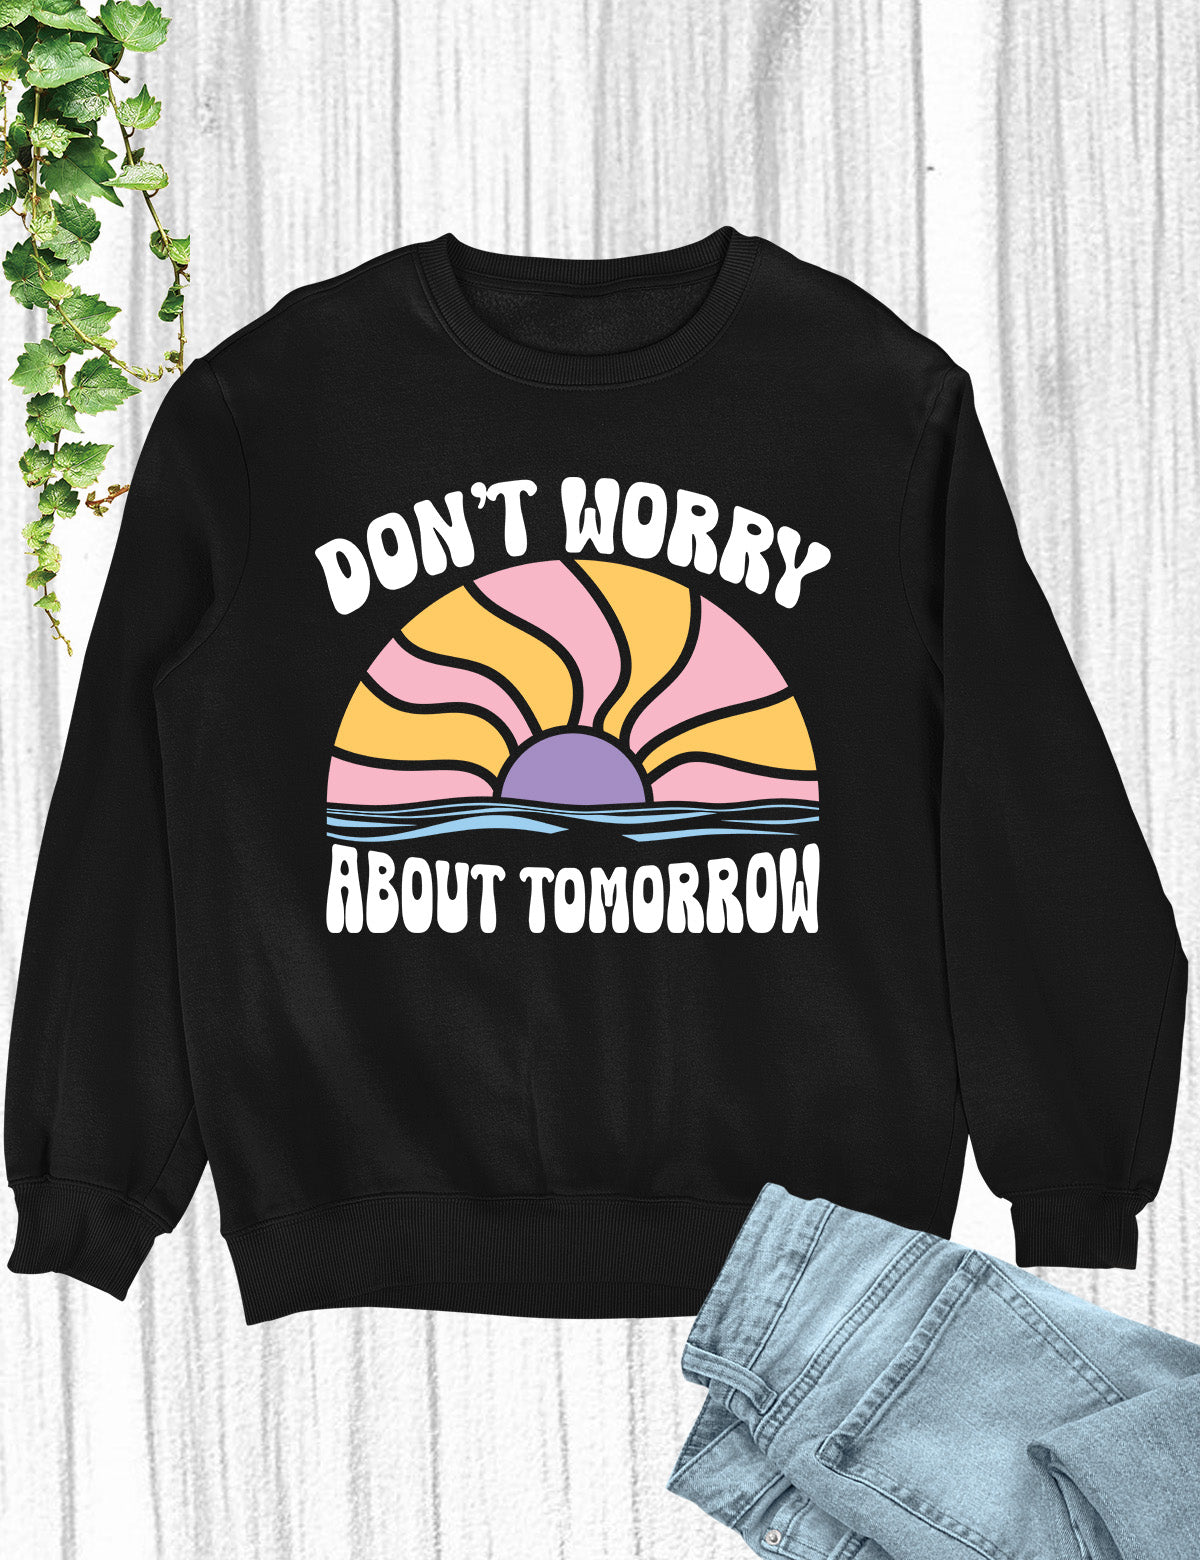 Don't Worry About Tomorrow Faith Based Christian Clothing Sweatshirts